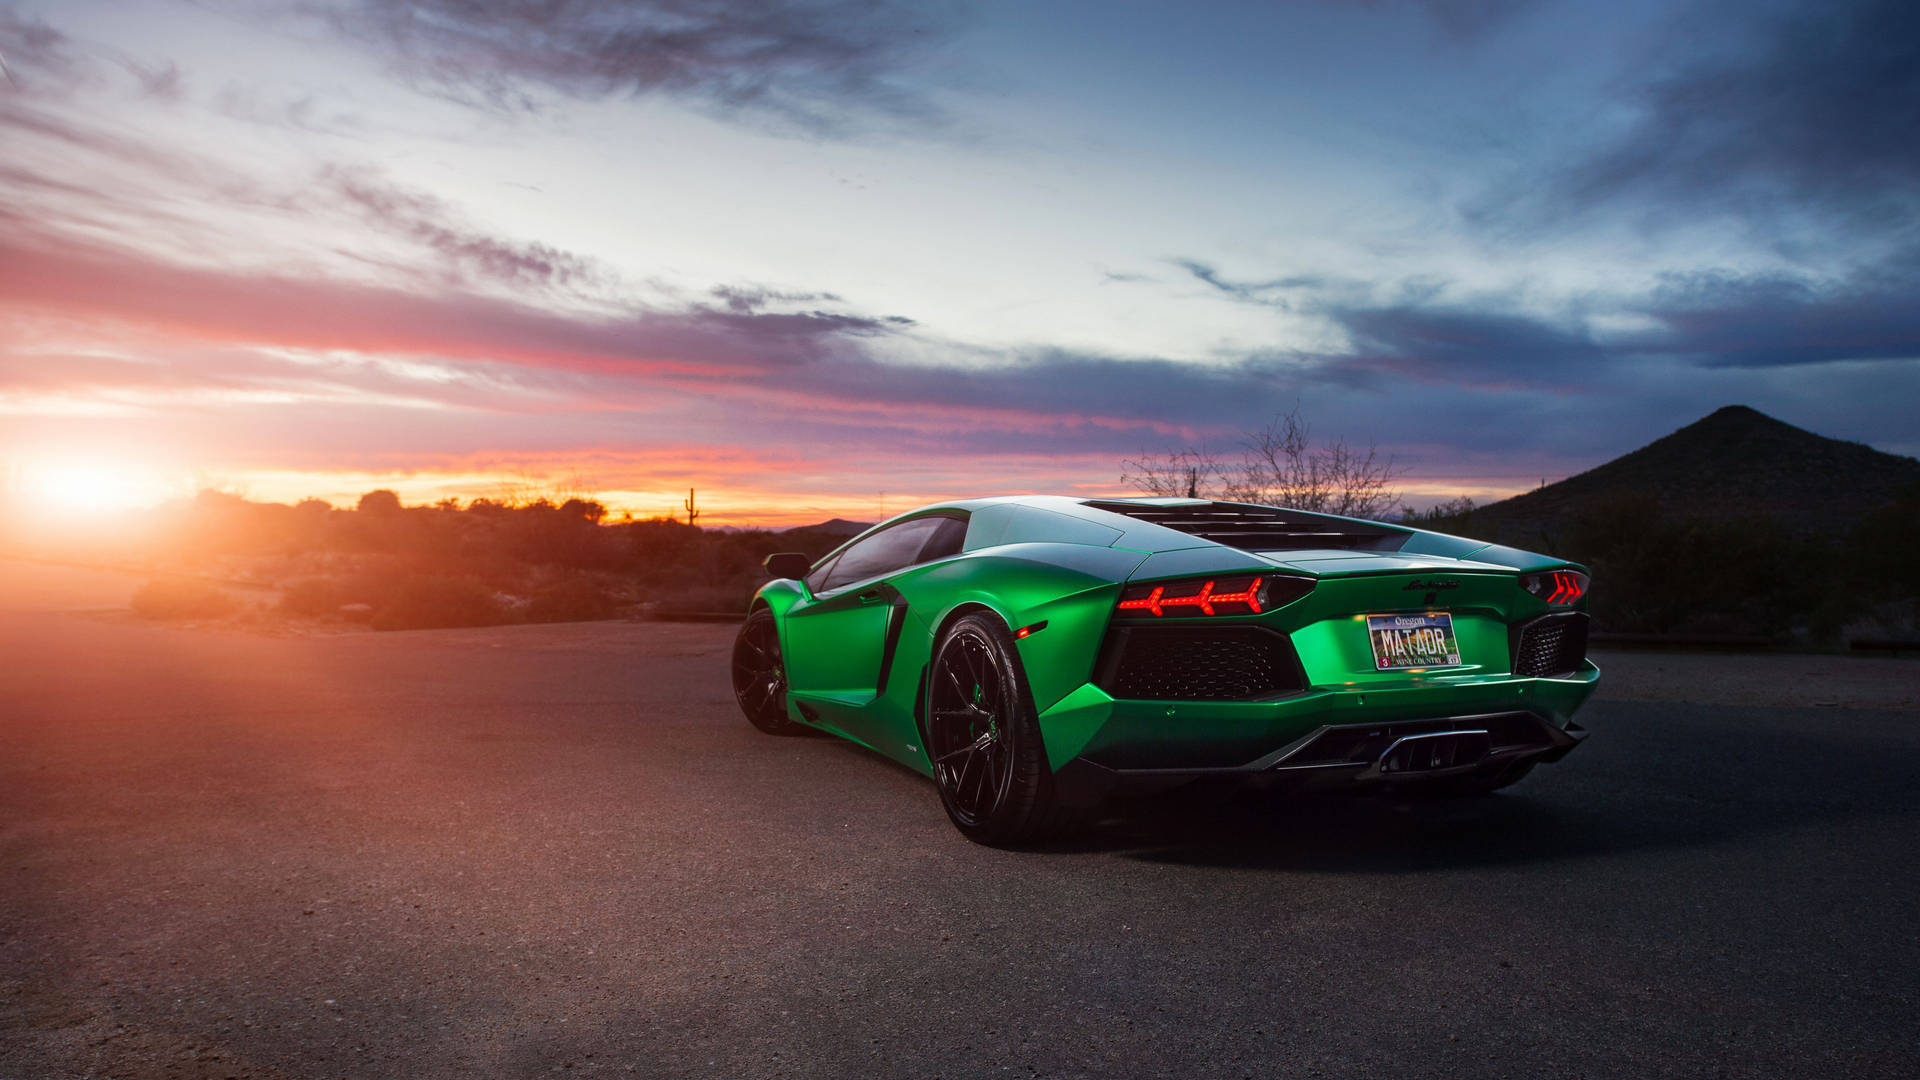 Cool Luxurious Cars: Shiny Green Lamborghini Wallpaper